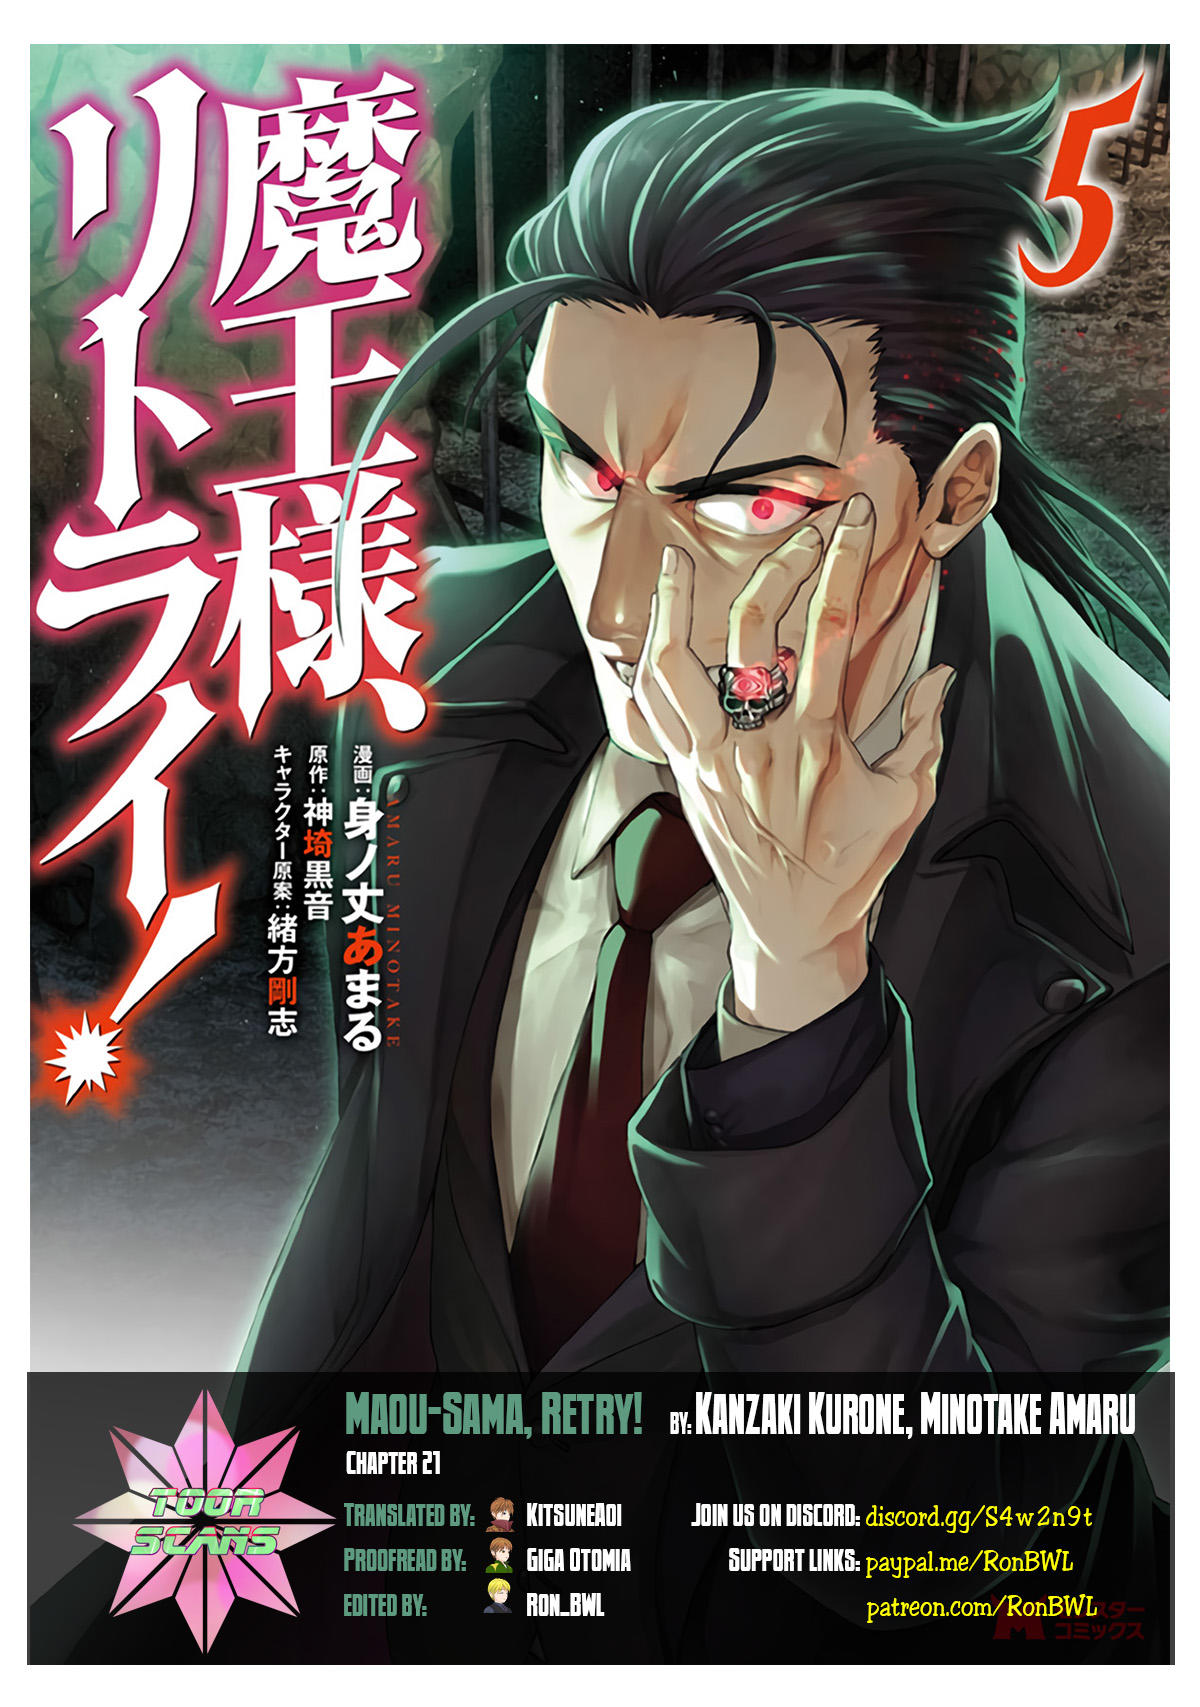 Manga/anime/lightnovelvn - Maou-sama, Retry! Vol.5 – 28/02